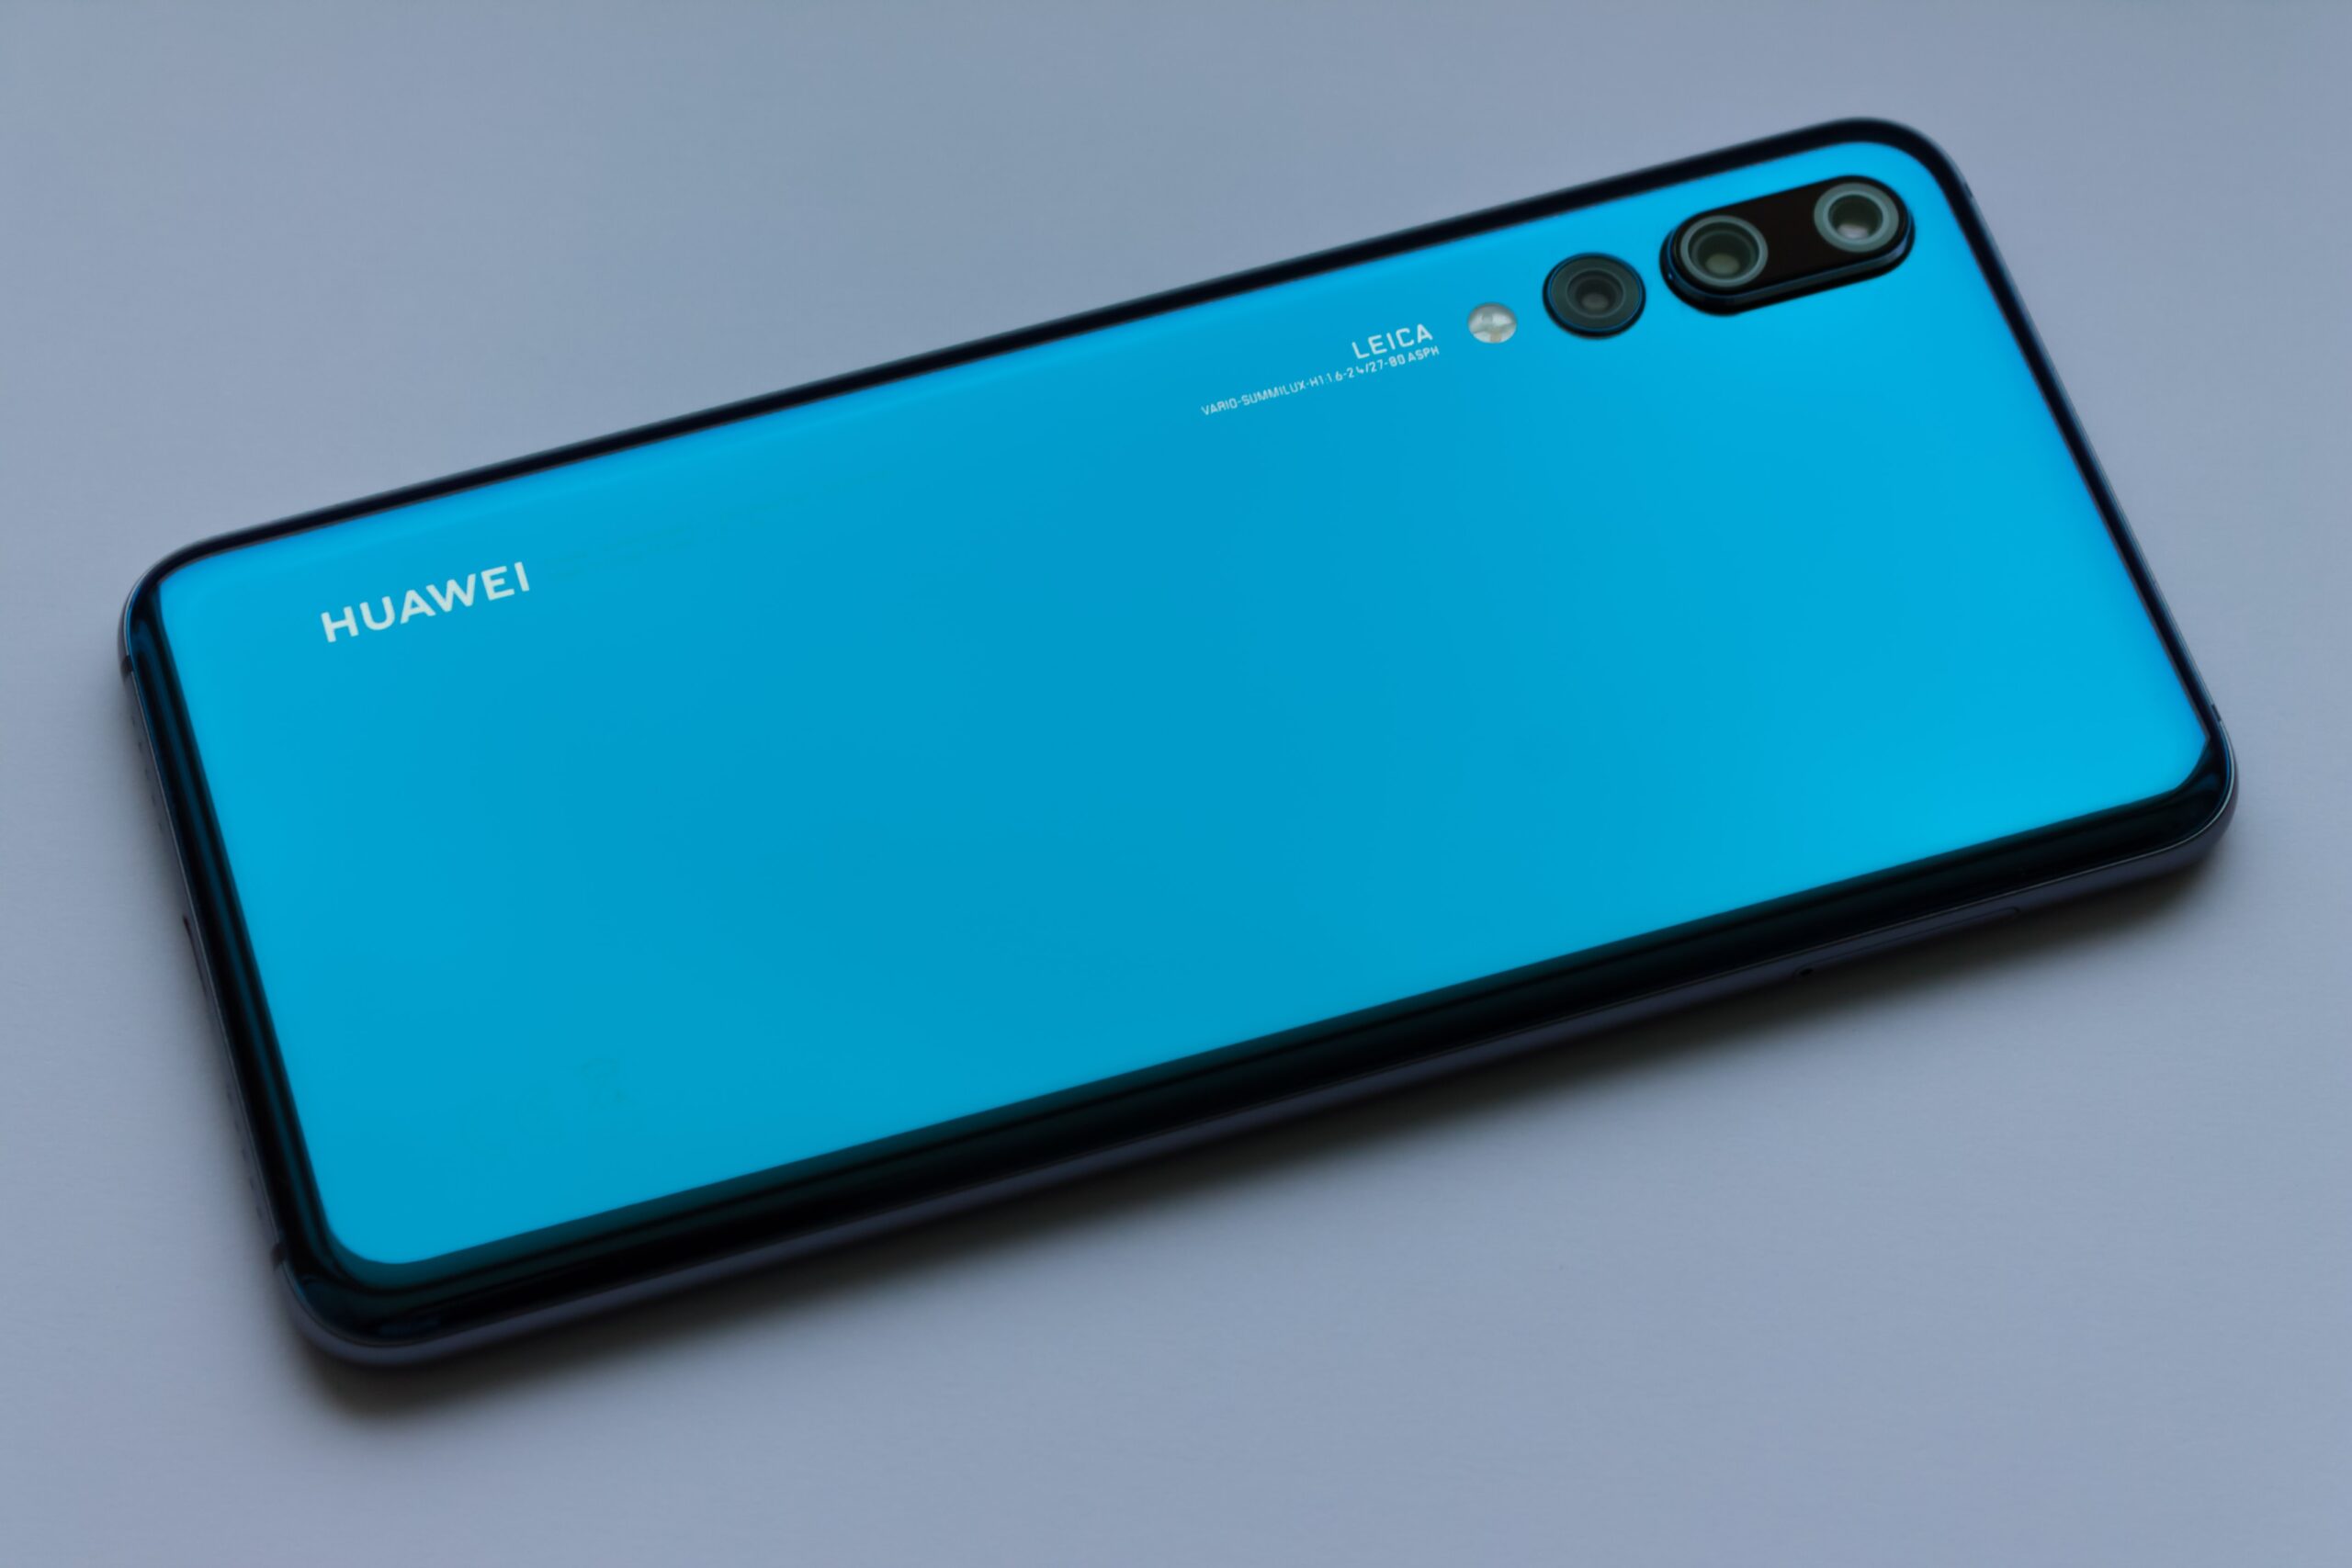 Blue Huawei Smartphone back view